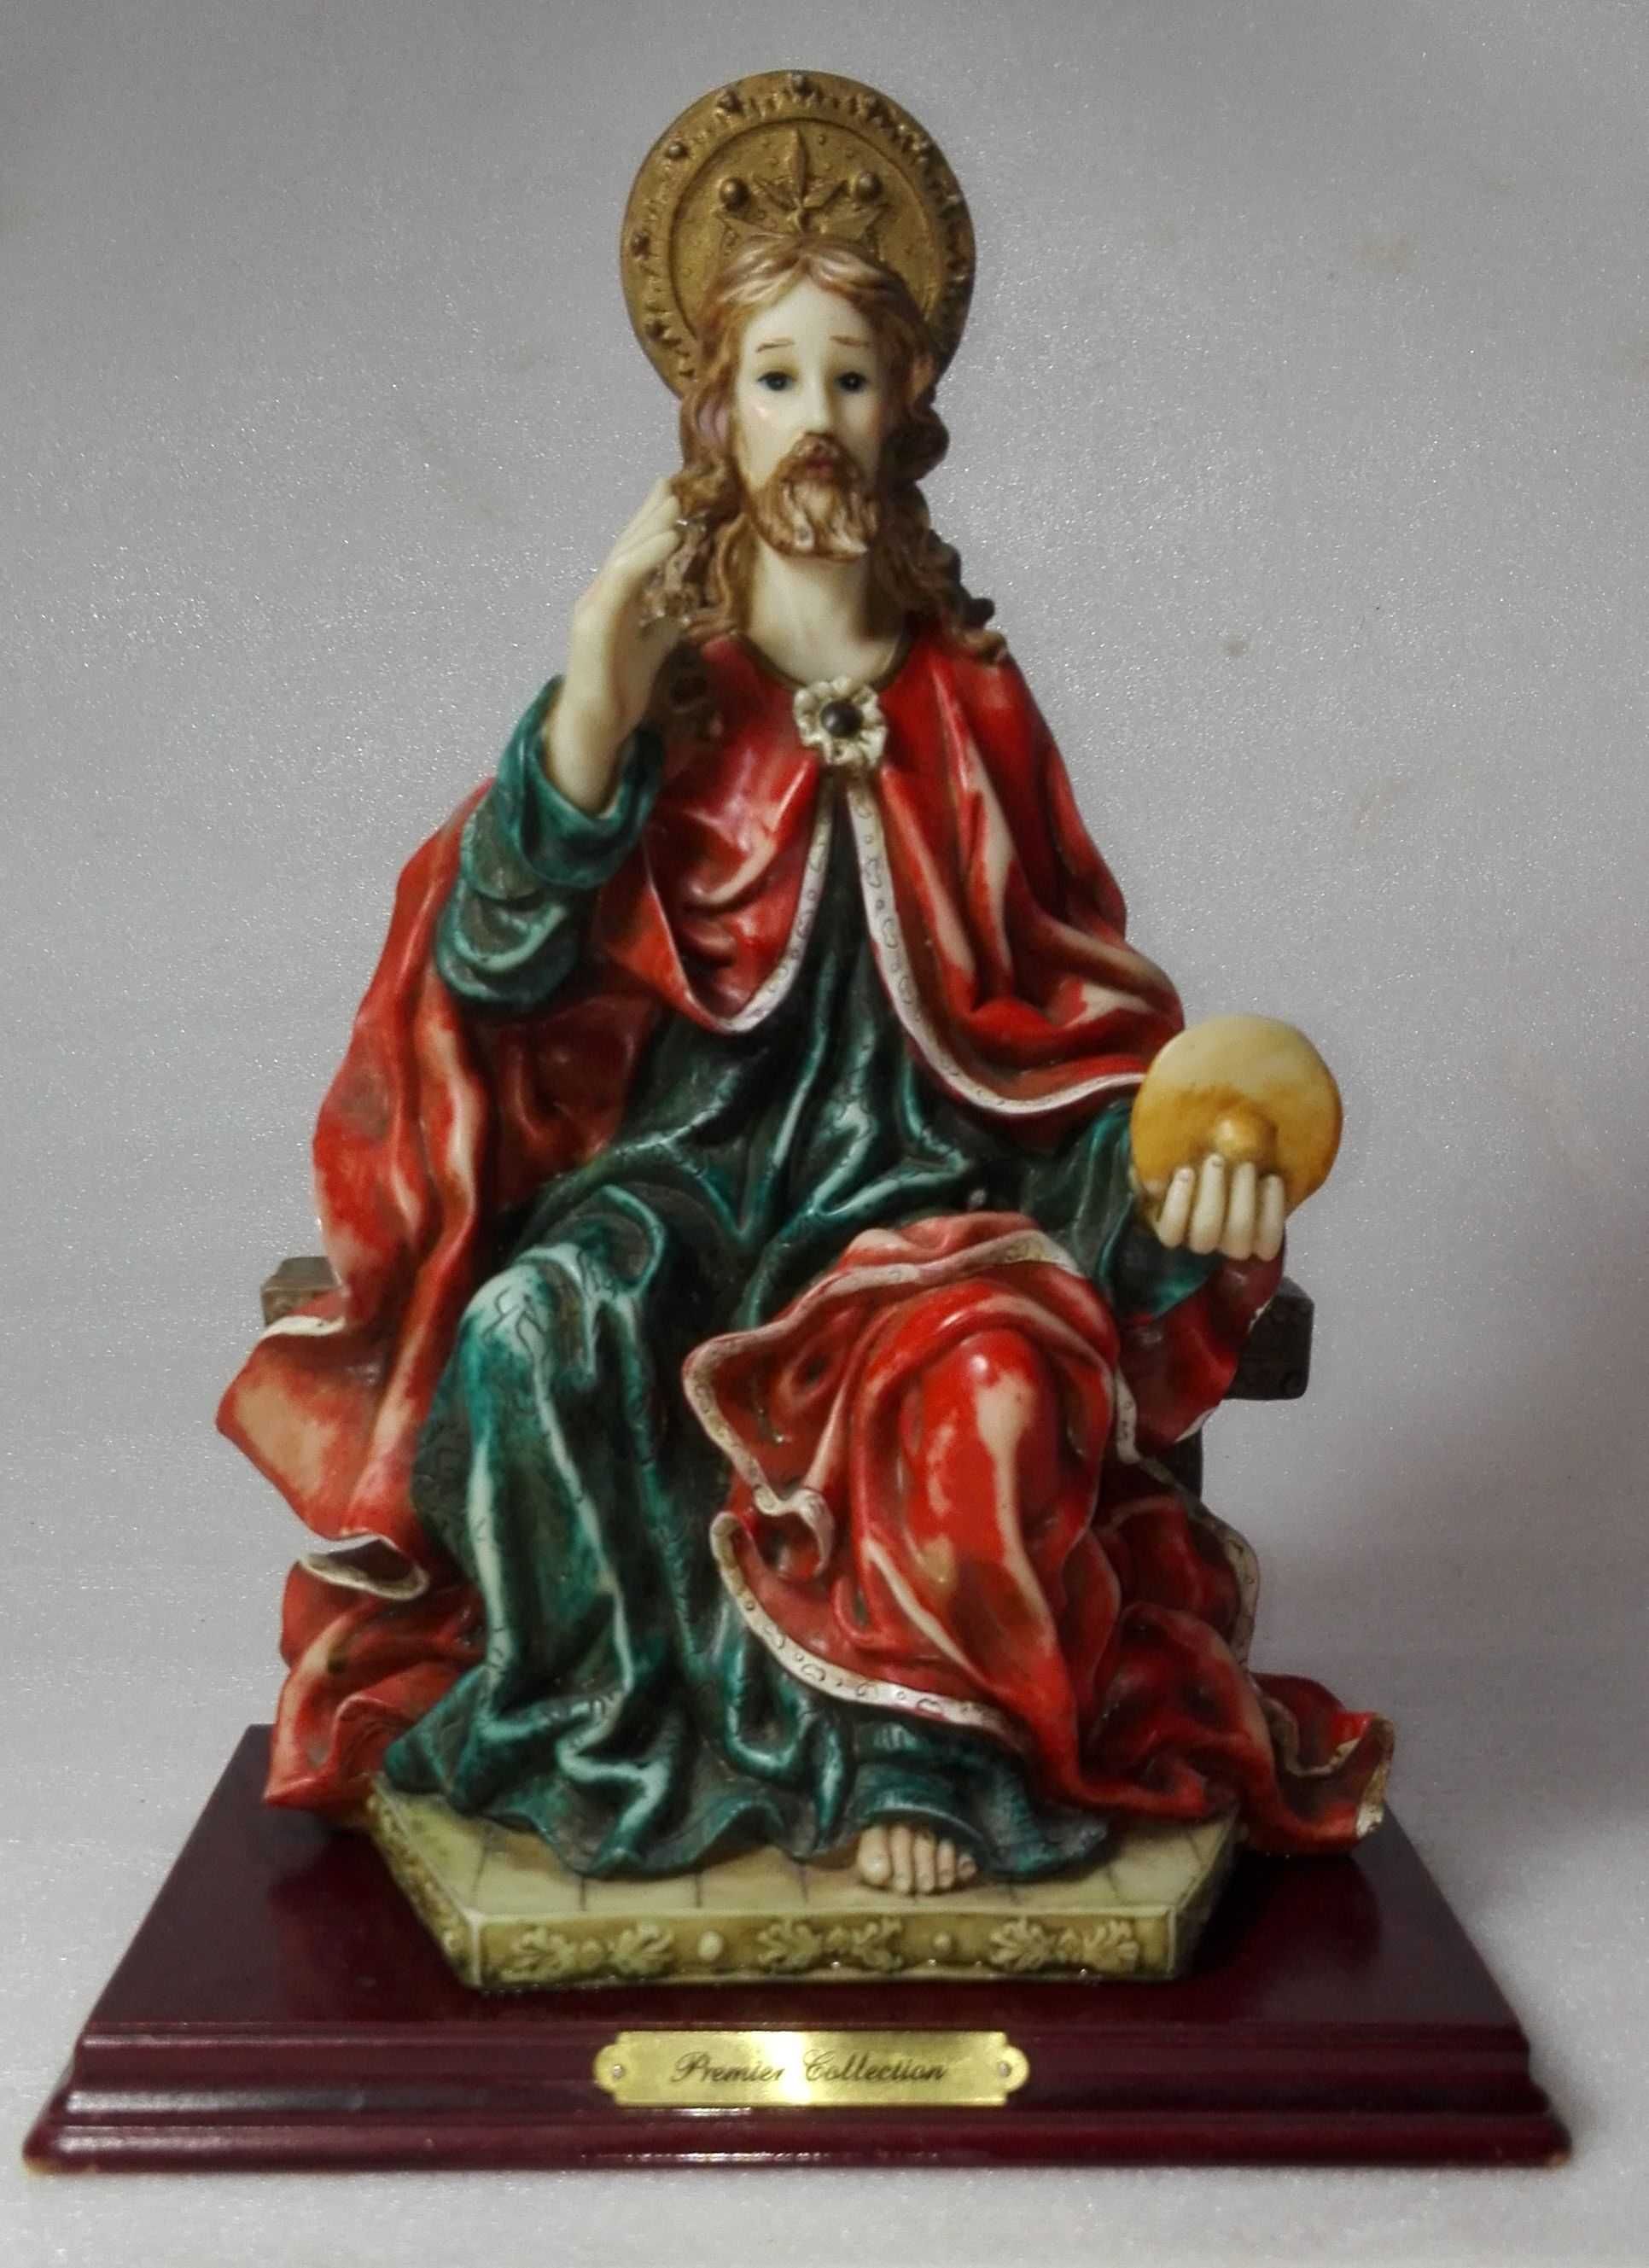 Jesus Cristo Premiere Collection (vintage)